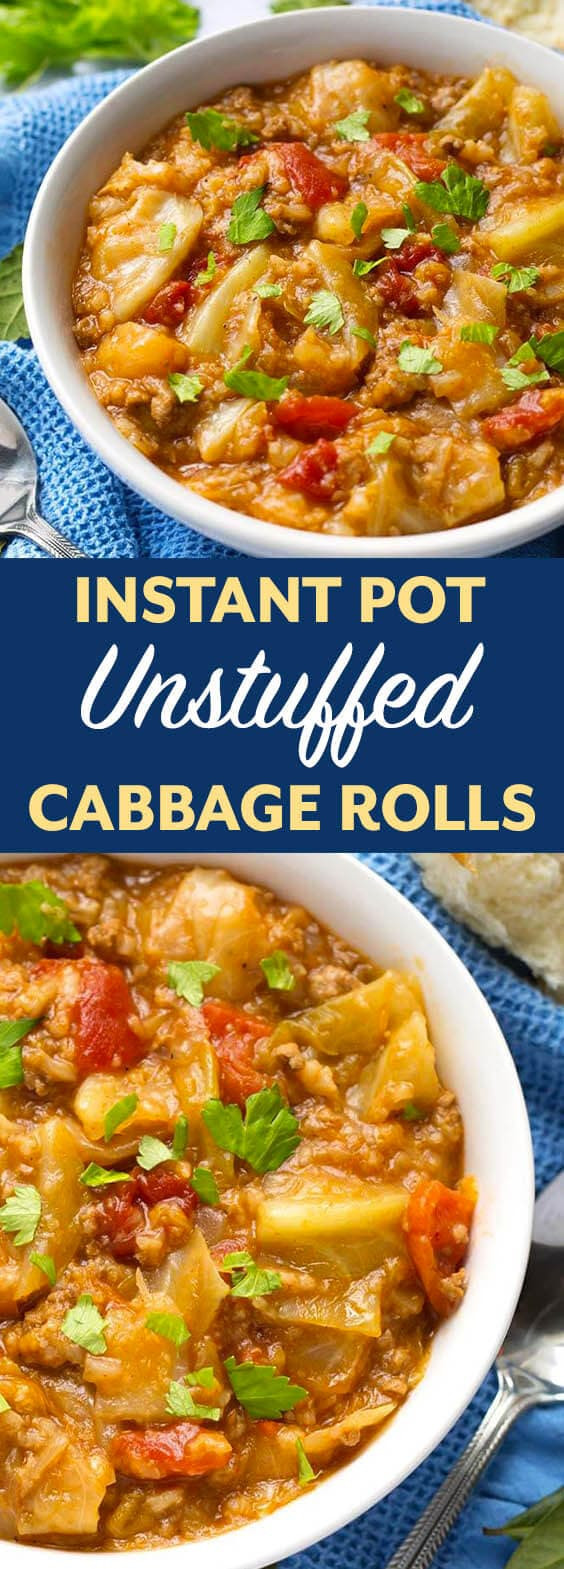 Instant Pot Cabbage Recipe
 Instant Pot Unstuffed Cabbage Rolls